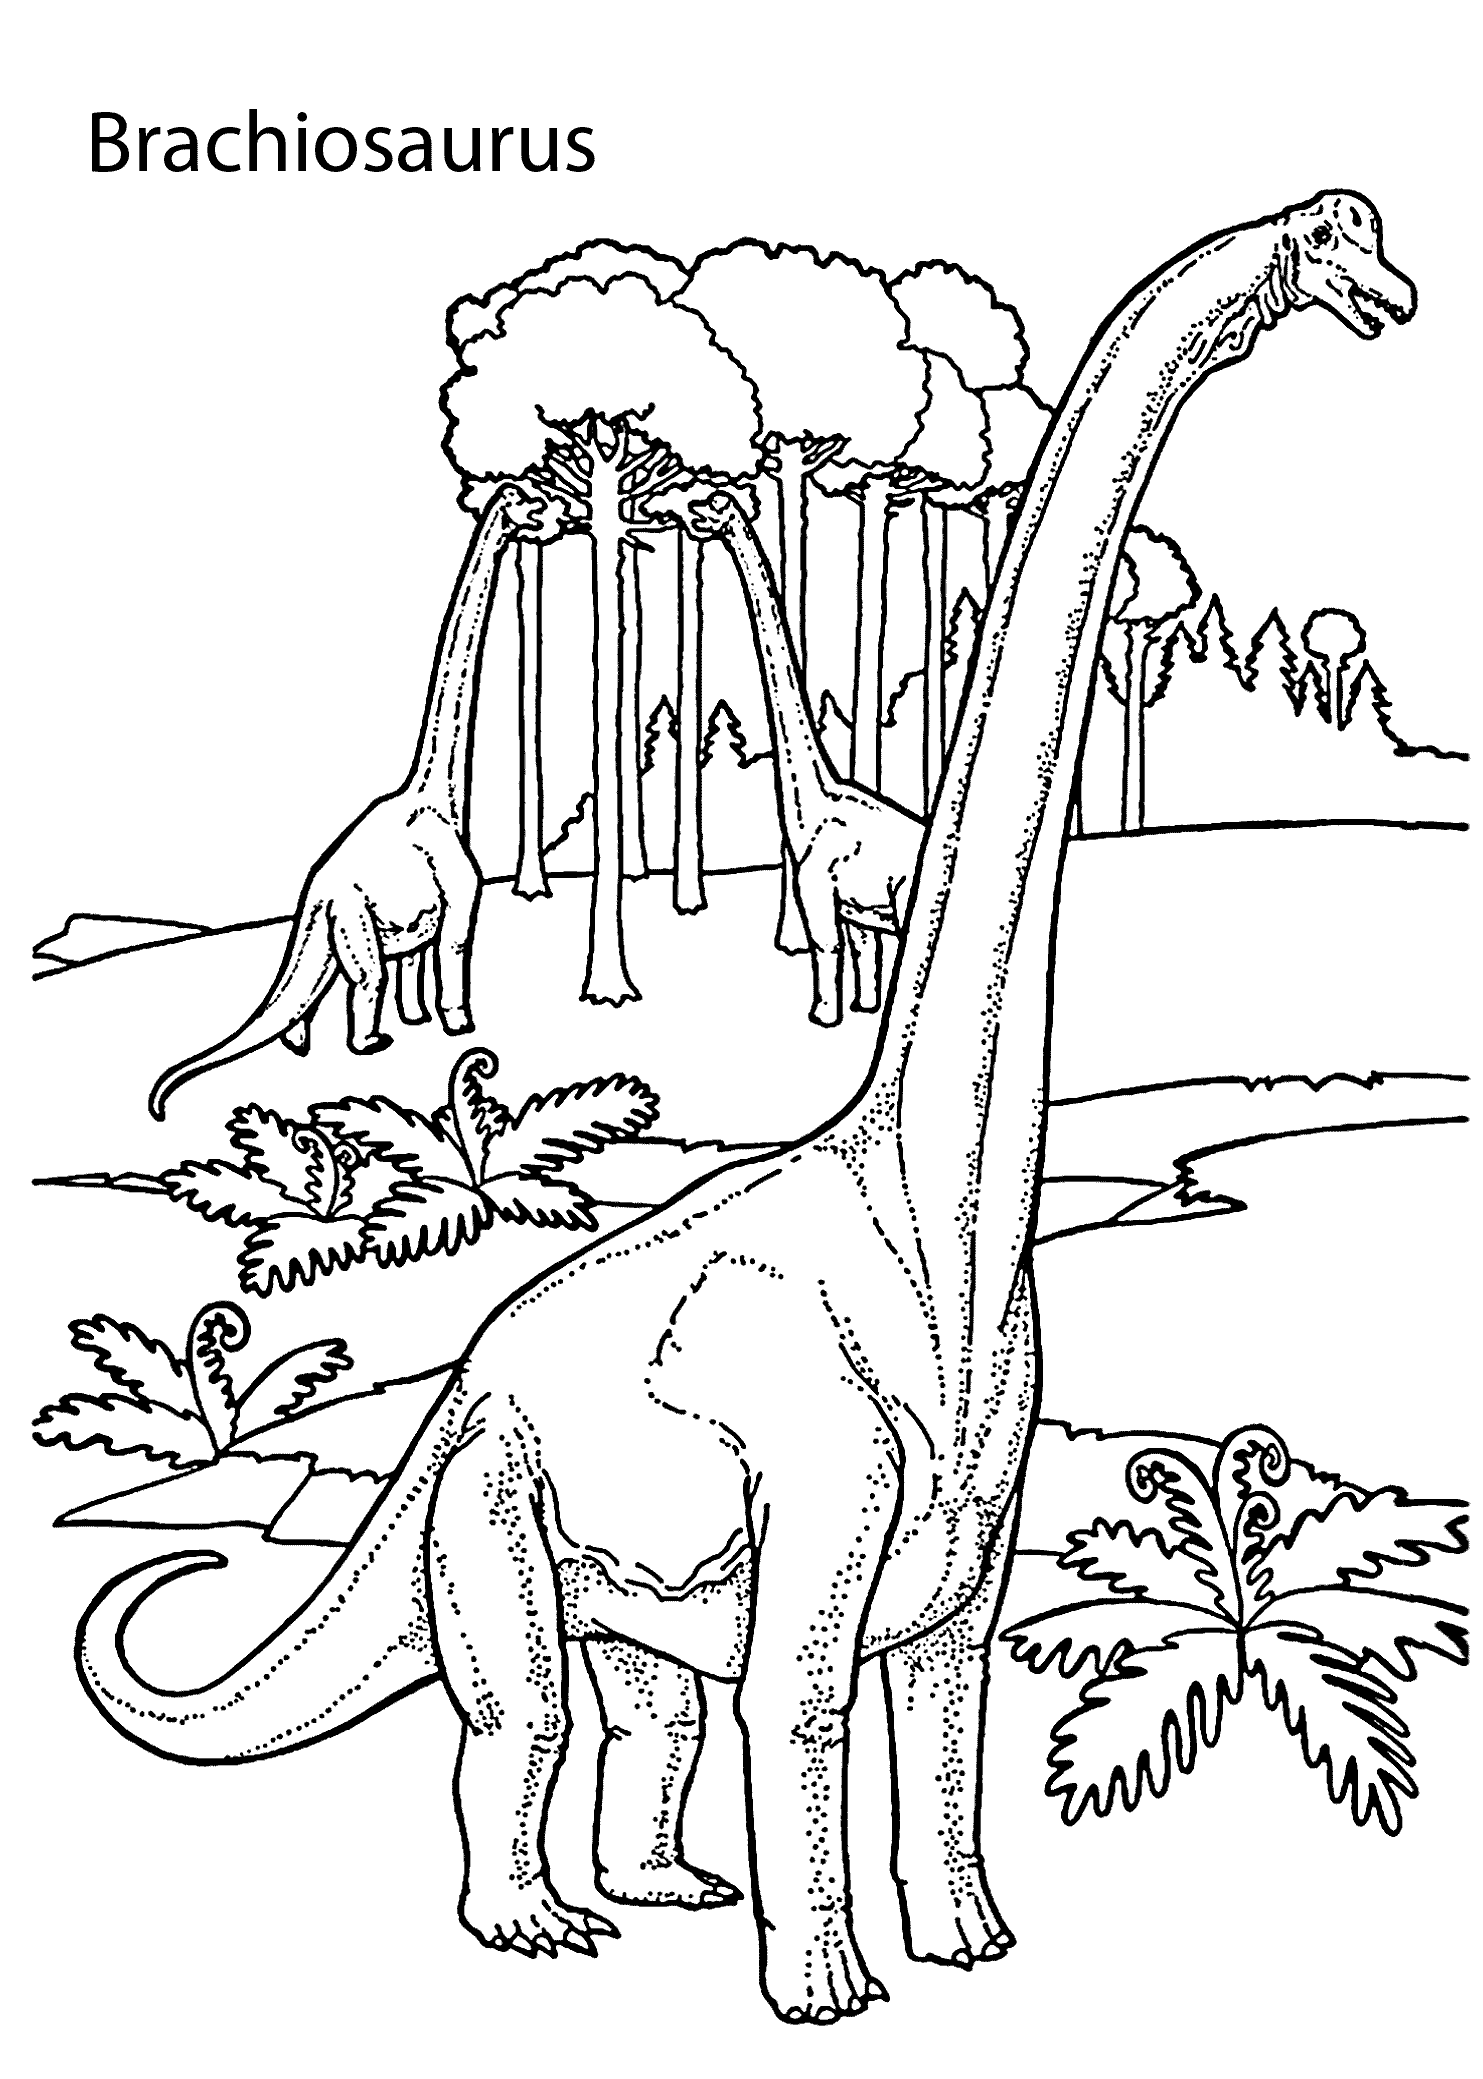 brachiosaurus colouring page